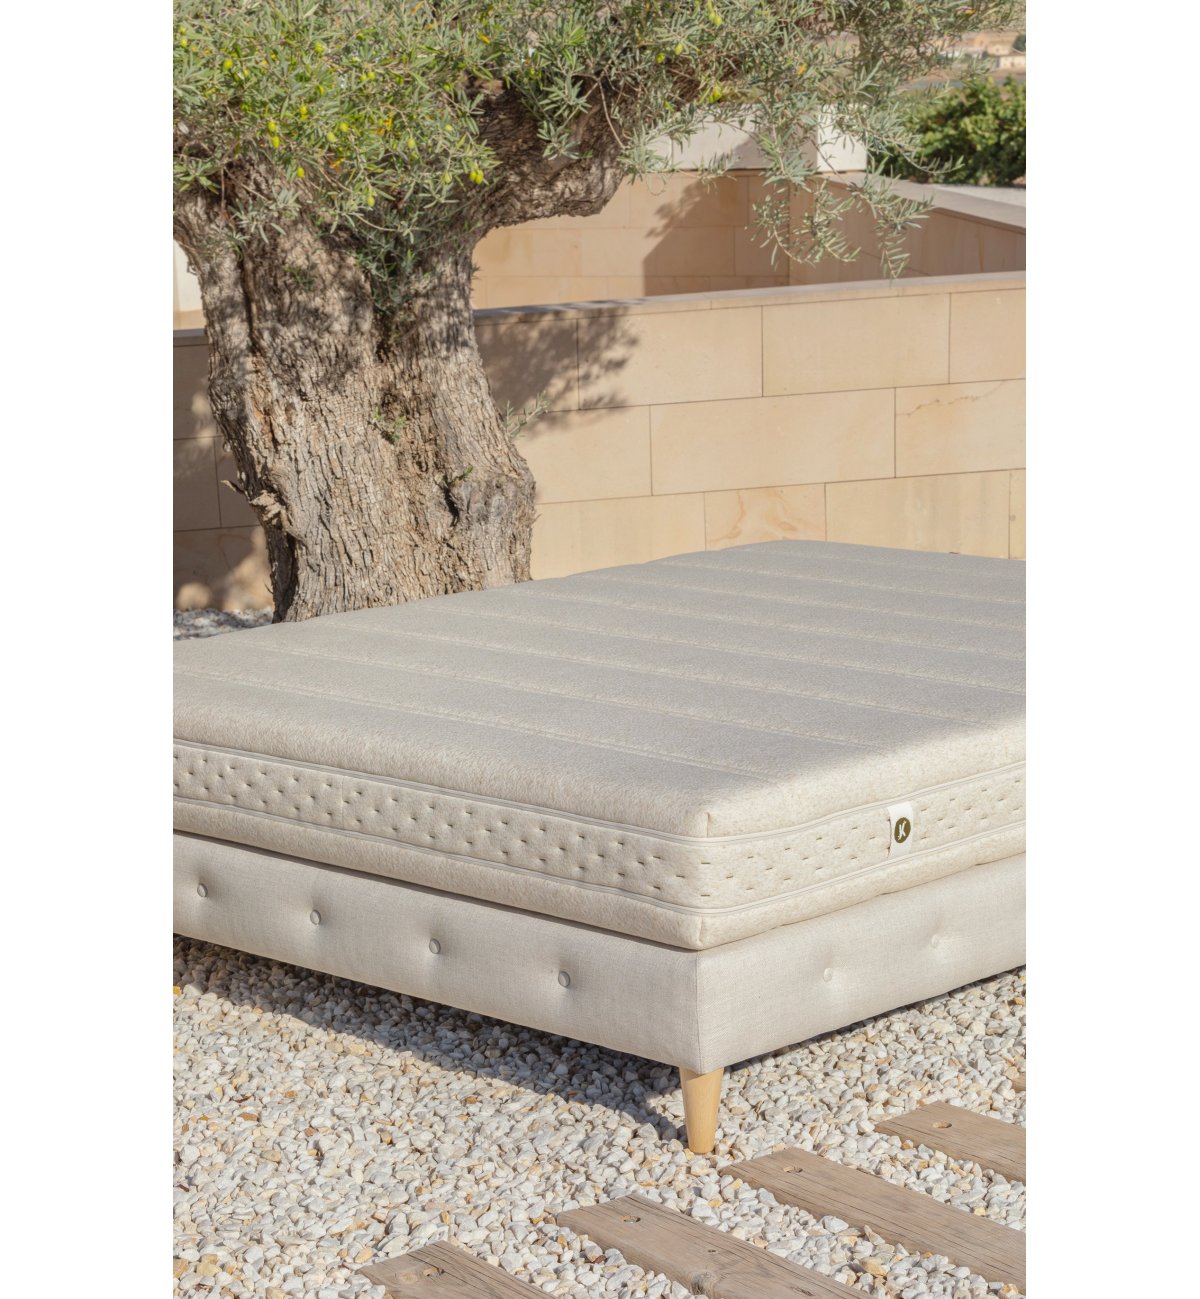 Chanvrenatura® Adult Mattress, the more natural and responsible mattress